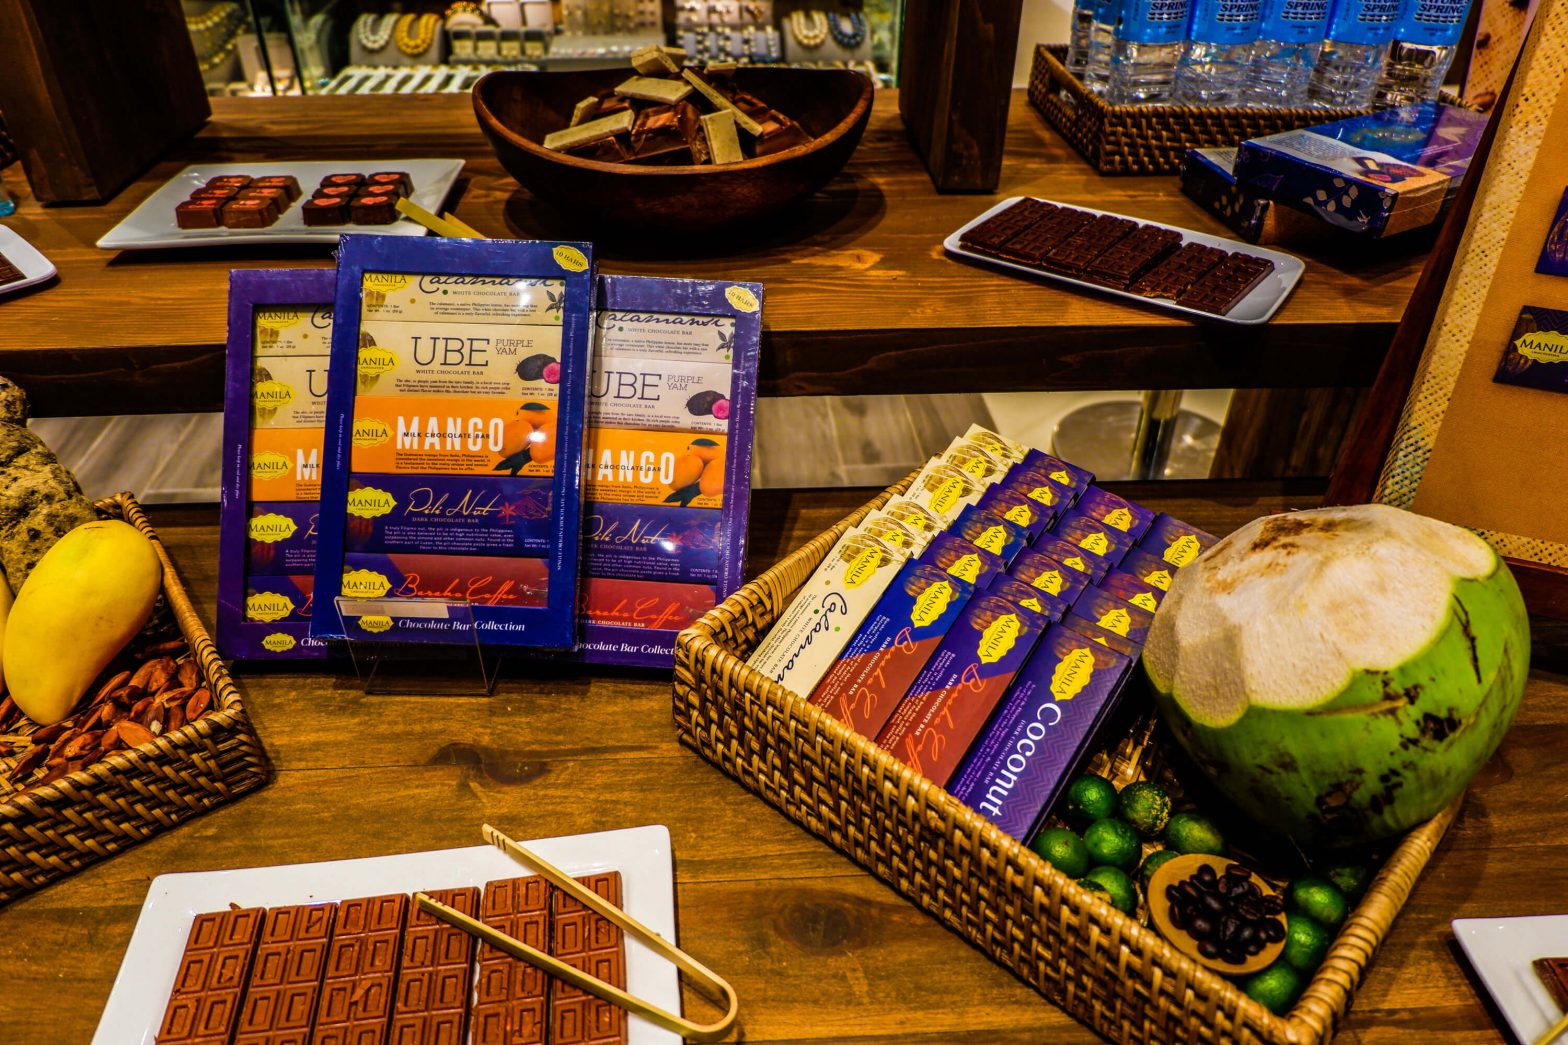 Manila Chocolatier promotes Filipino culture with chocolate flavors